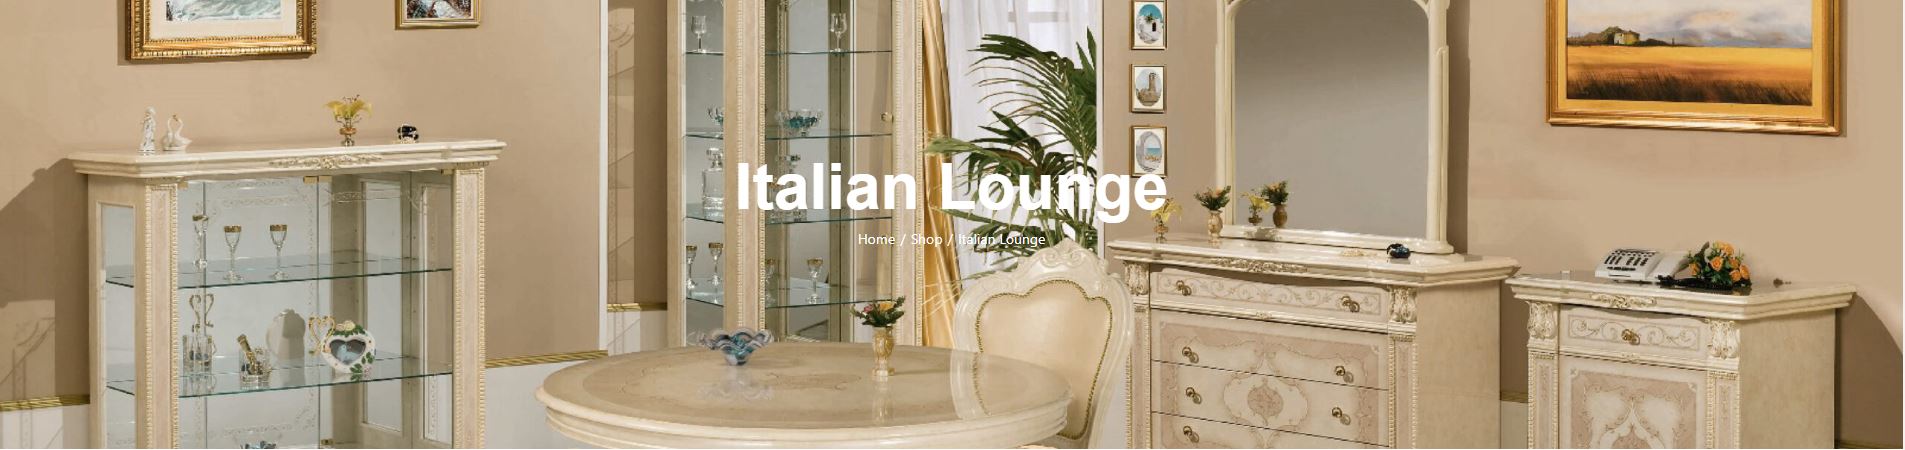 italian leather lounge